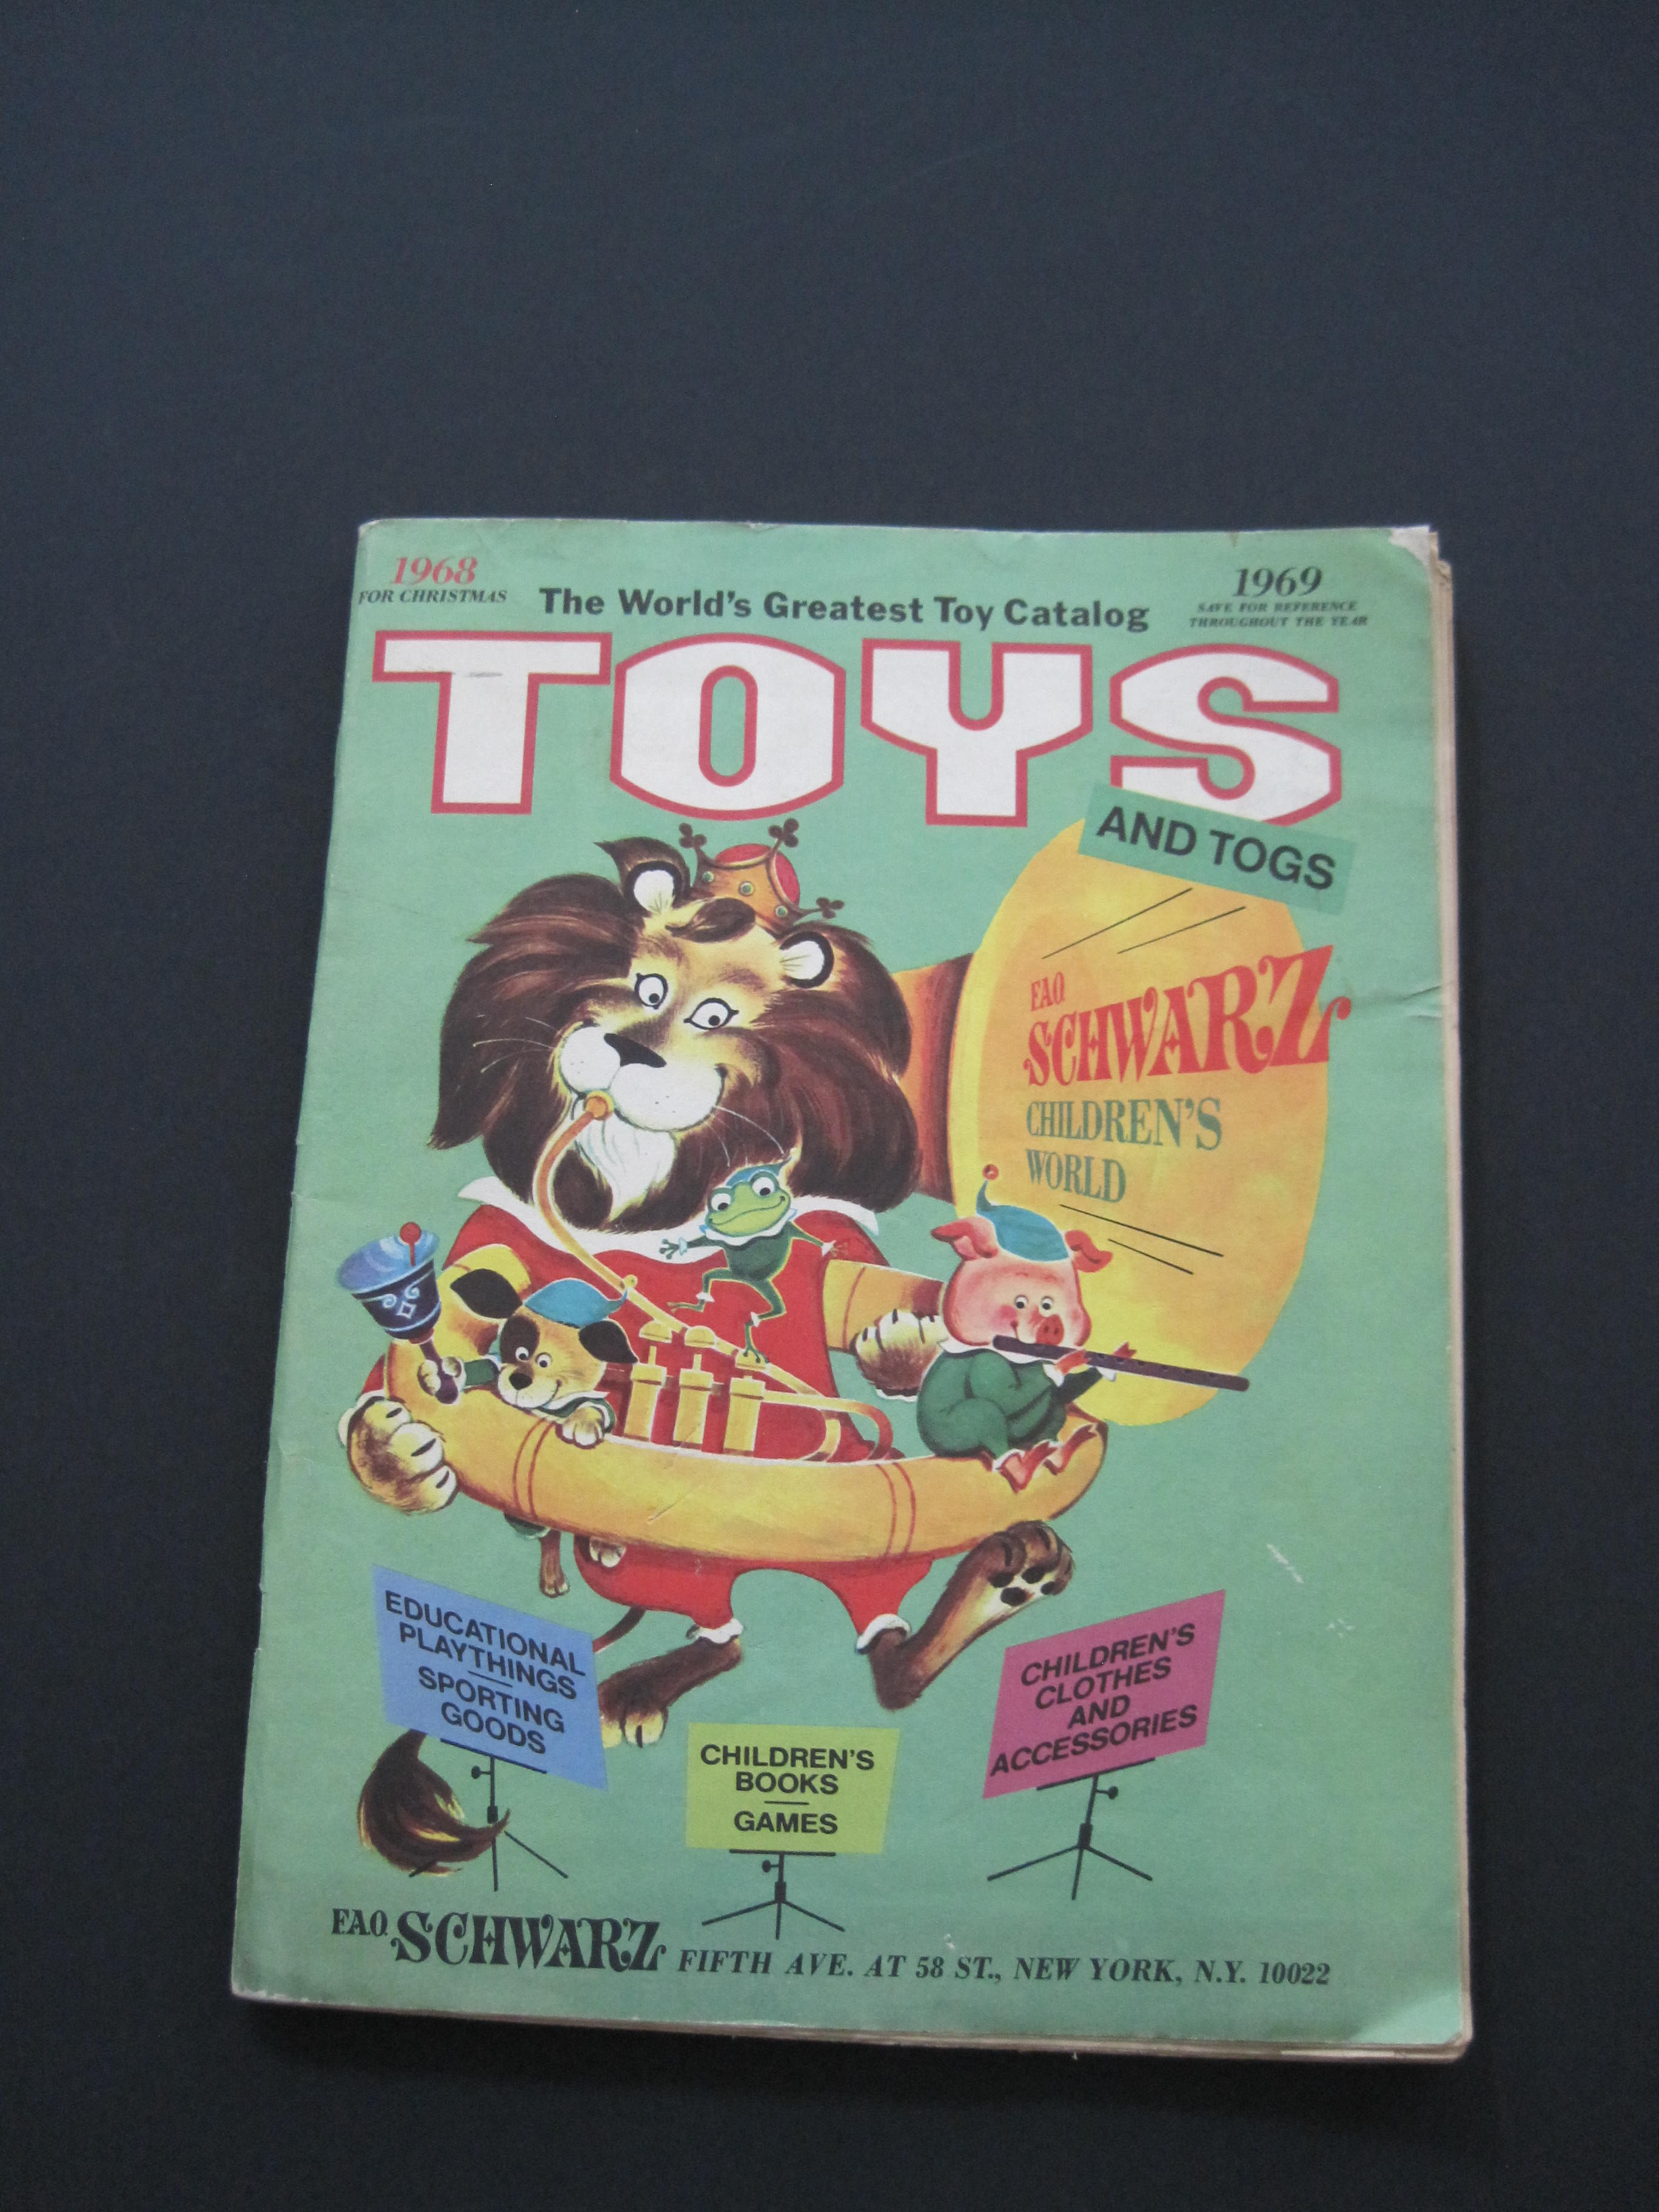 Greatest Toy Catalog By F A O Schwarz